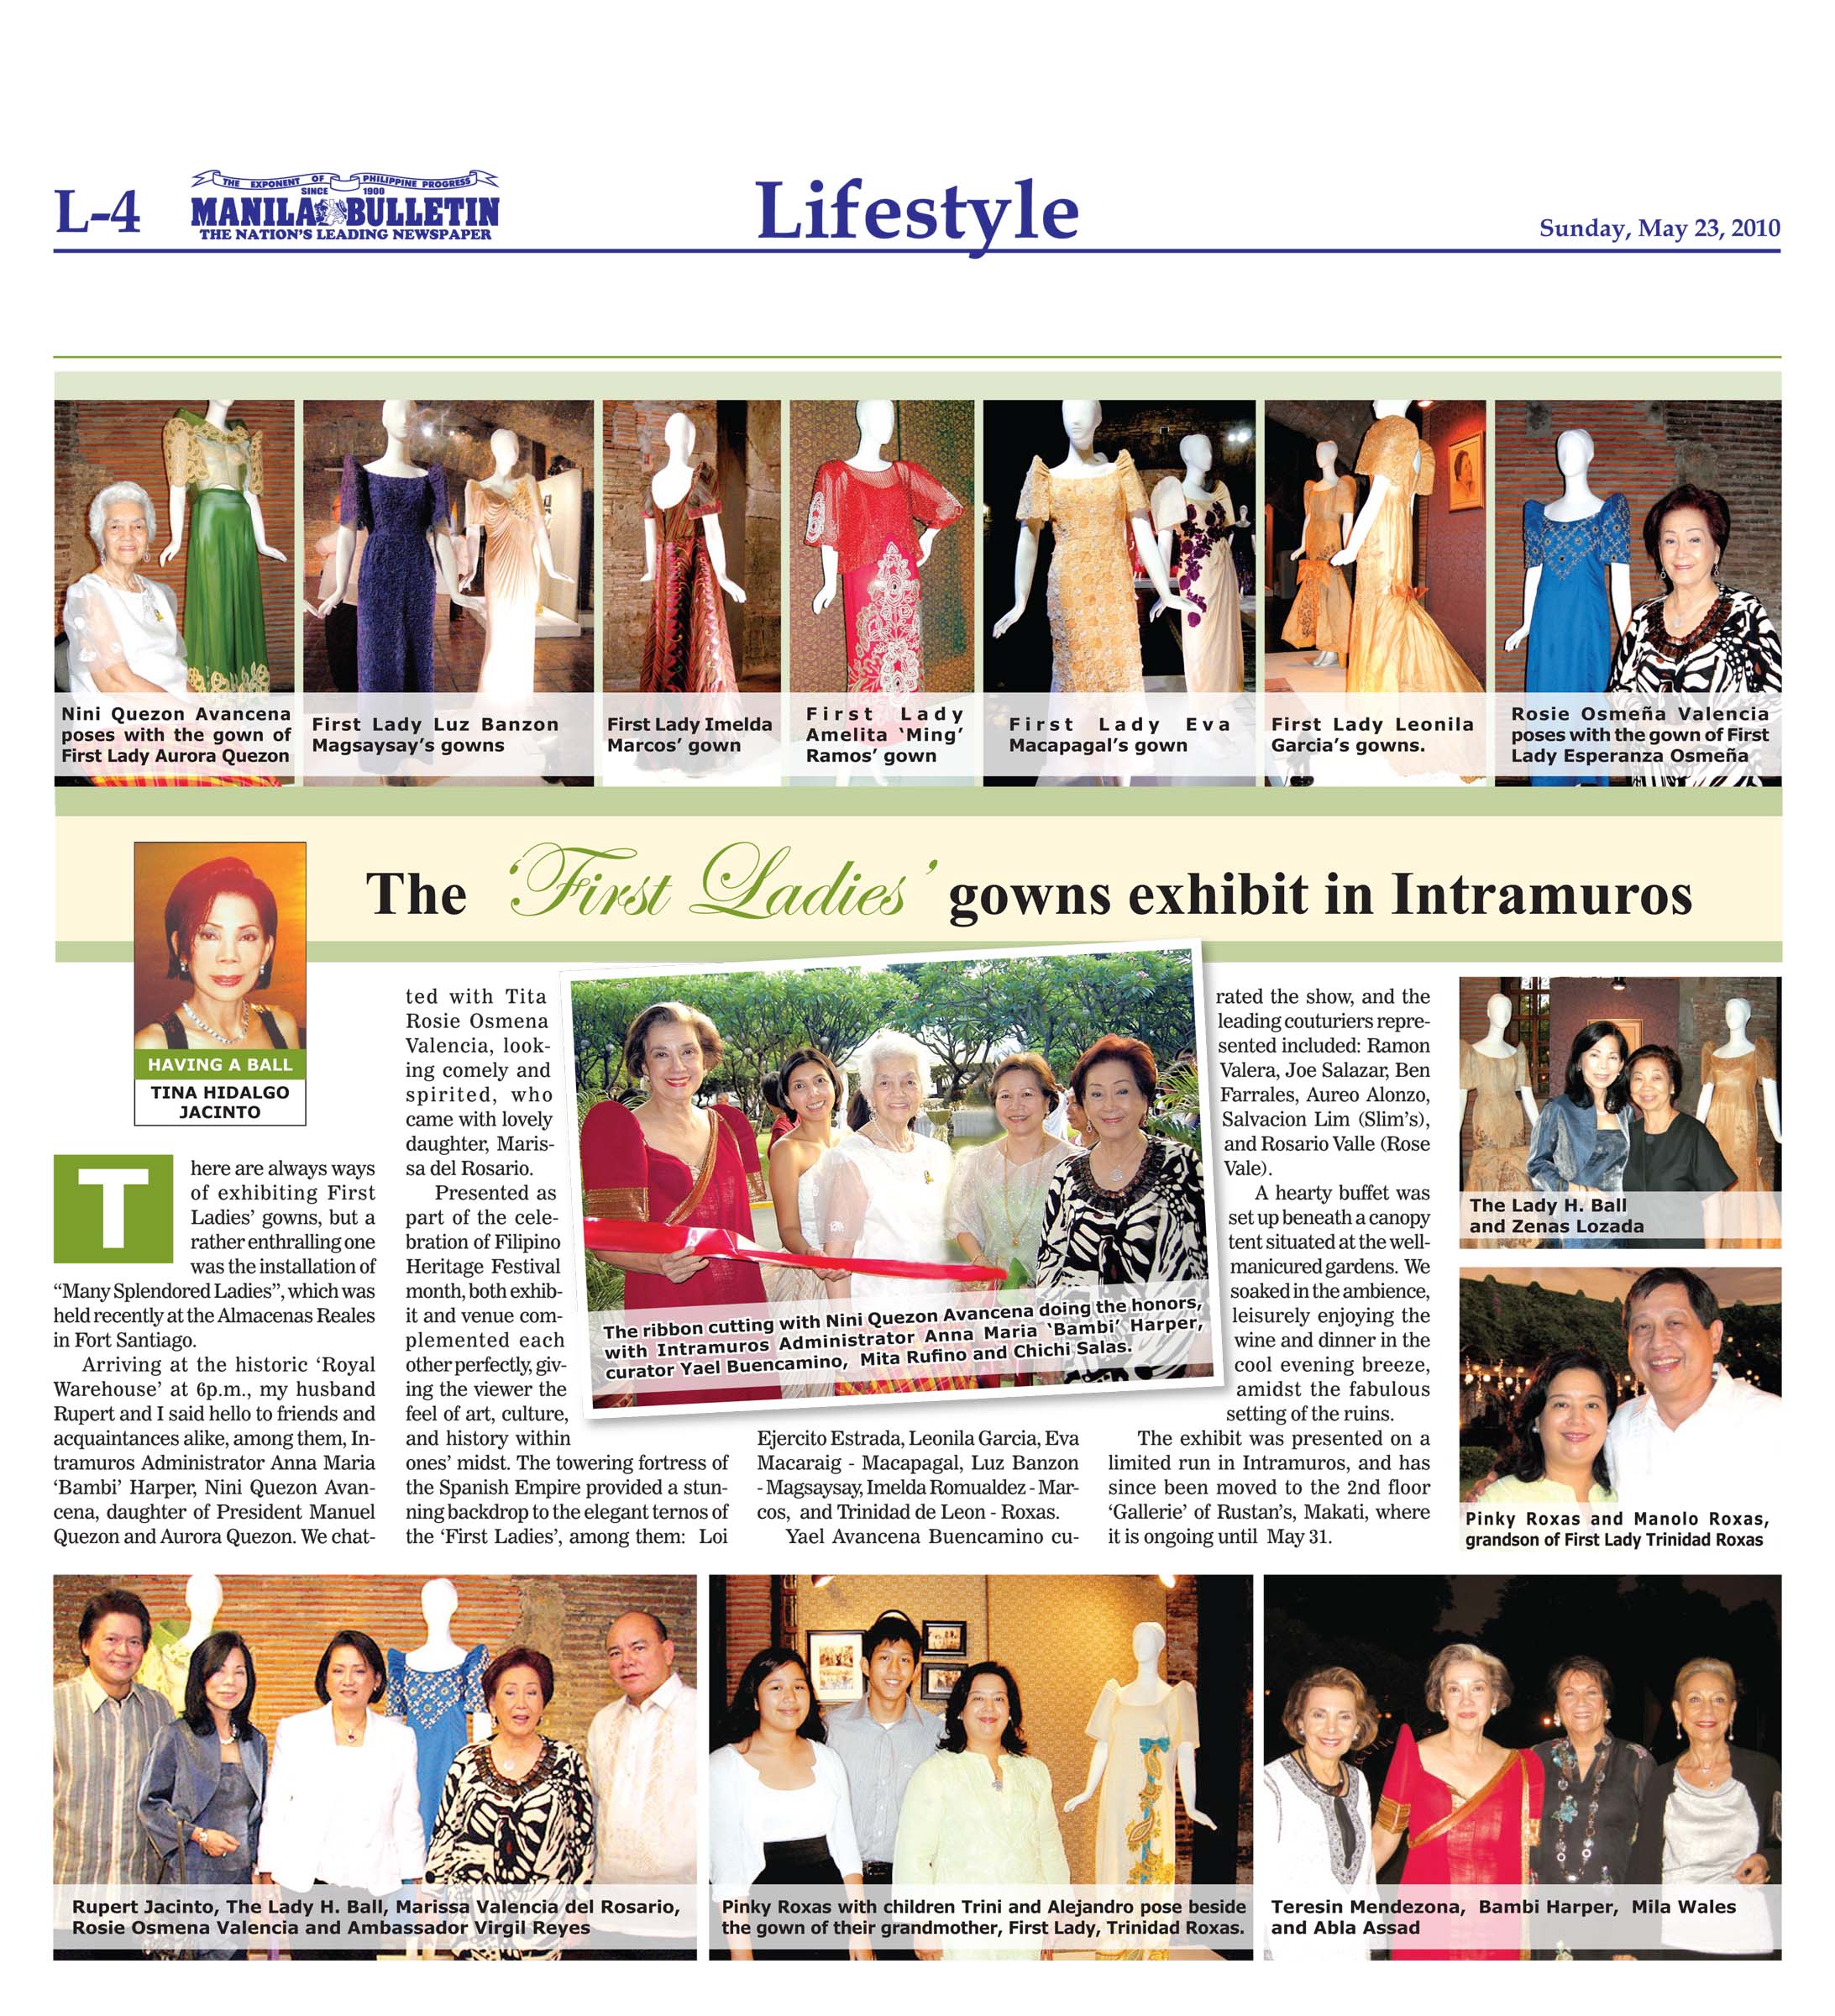 The First Ladies gowns exhibit in Intramuros